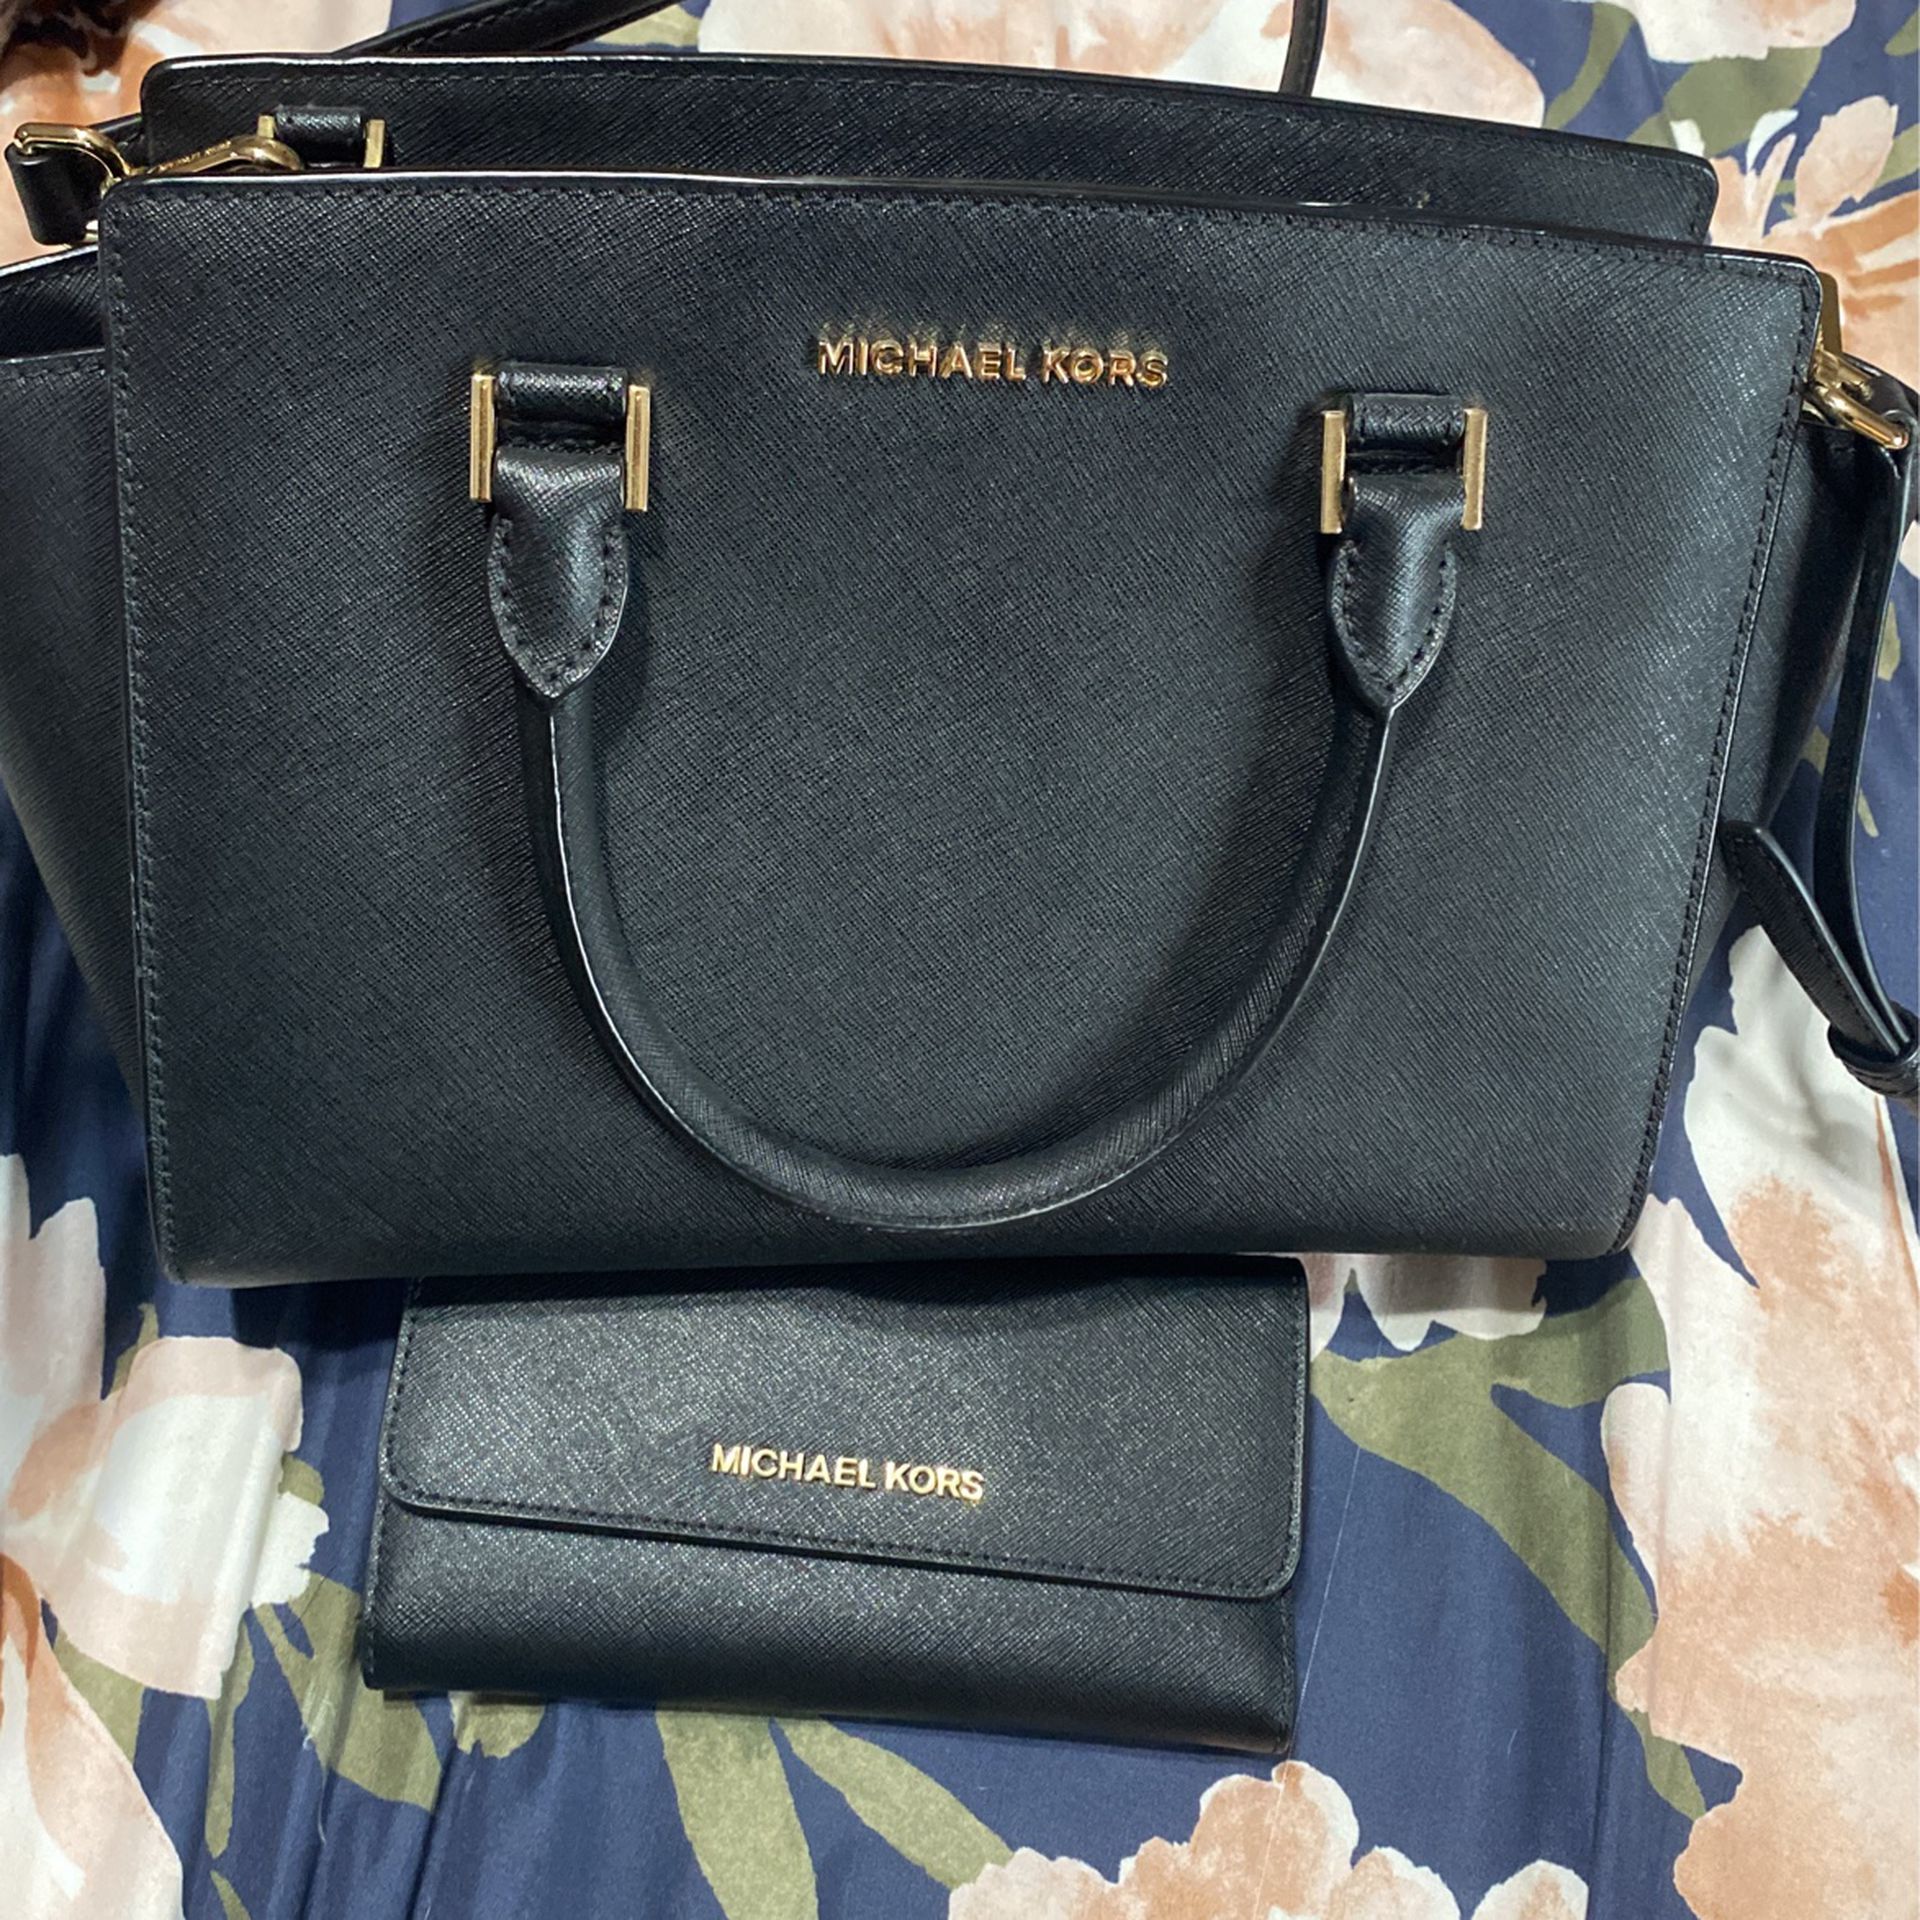 MK Bag and Wallet 